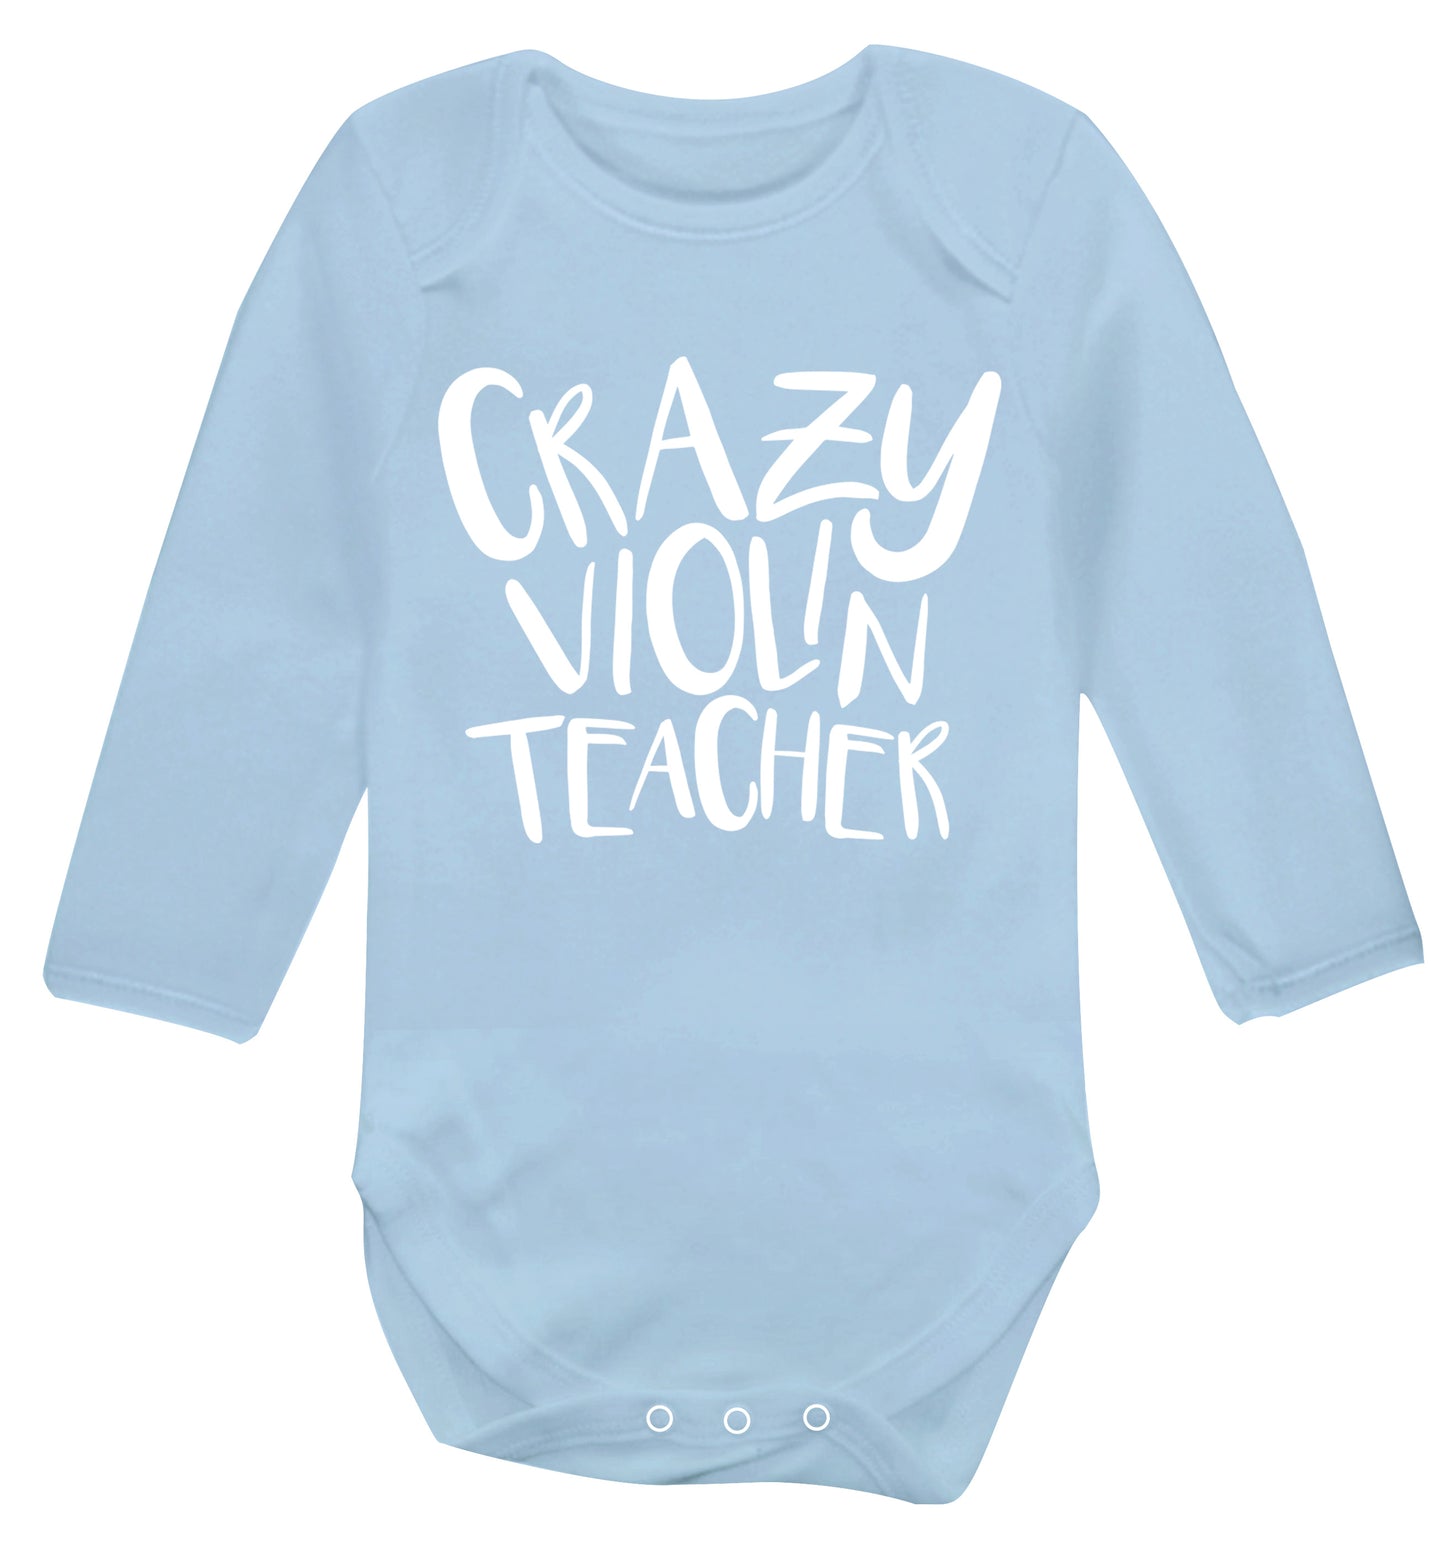 Crazy violin teacher Baby Vest long sleeved pale blue 6-12 months